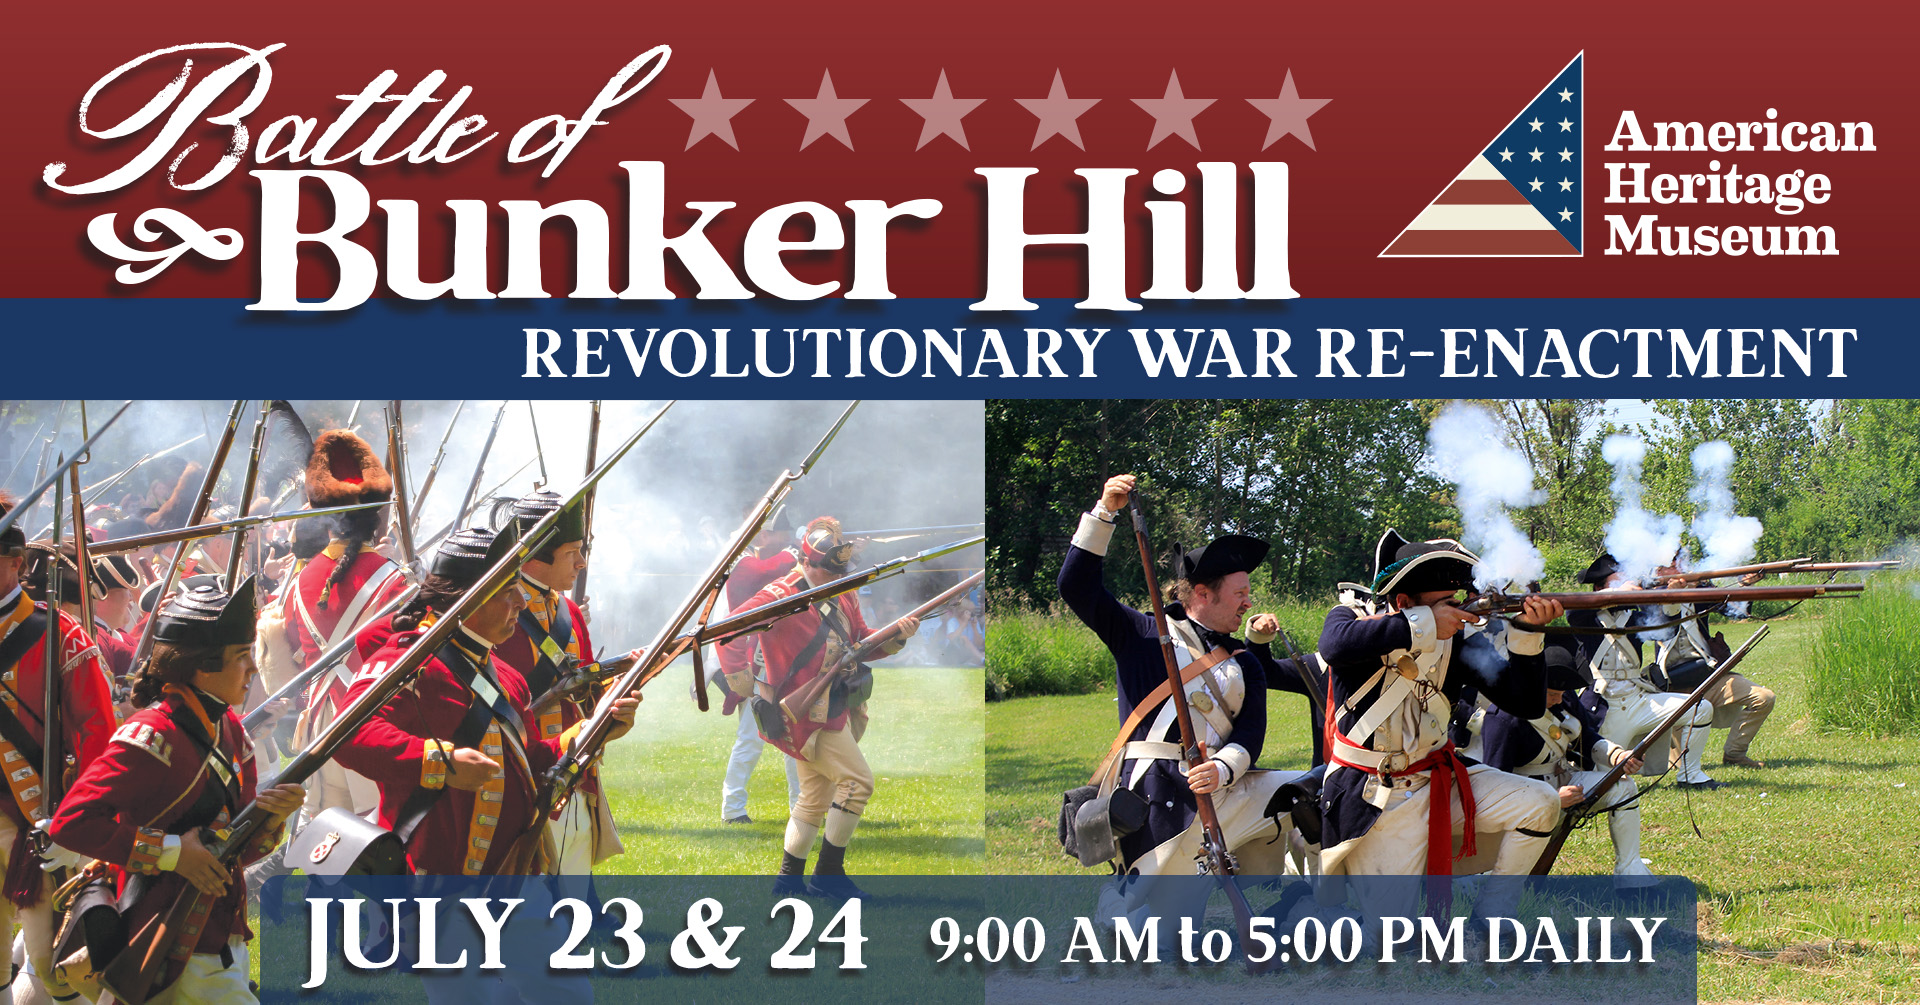 Battle of Bunker Hill - Revolutionary War Re-Enactment